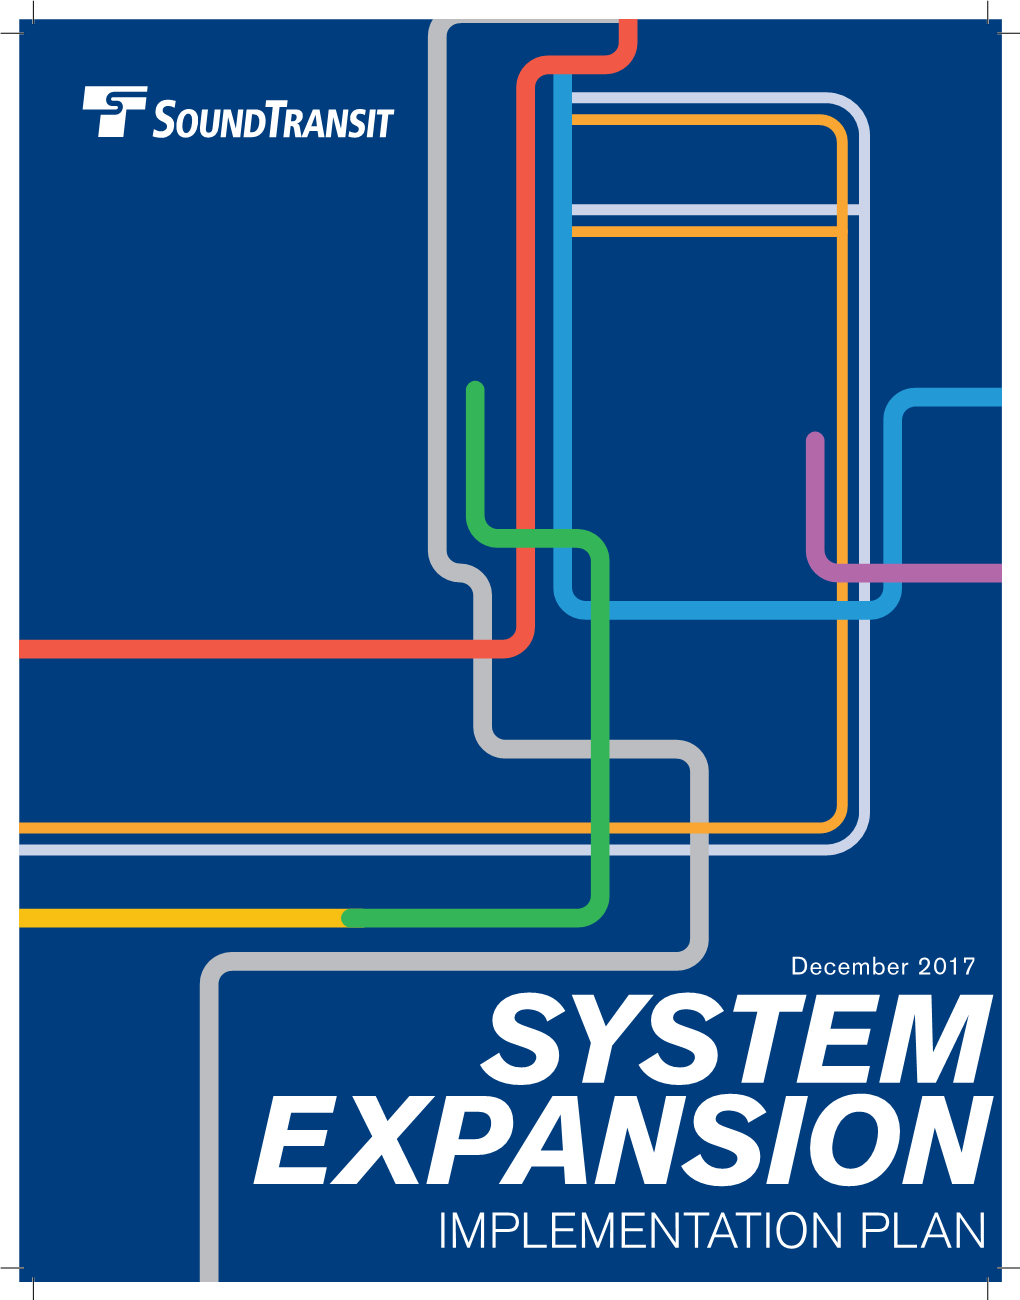 ST3 System Expansion Implementation Plan